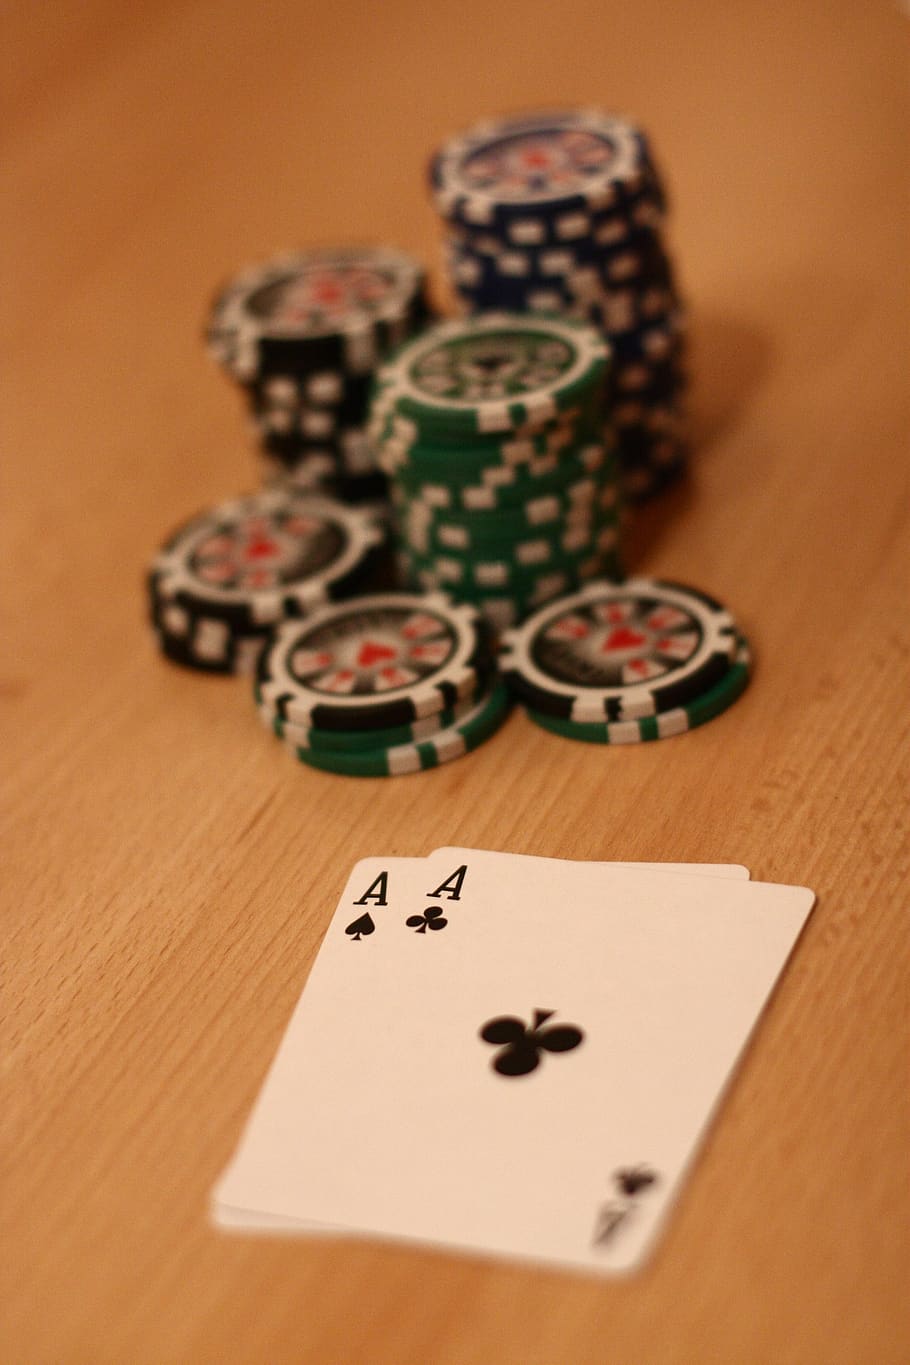 poker, poker chip, play poker, play, gambling, win, casino, card game, risk, profit